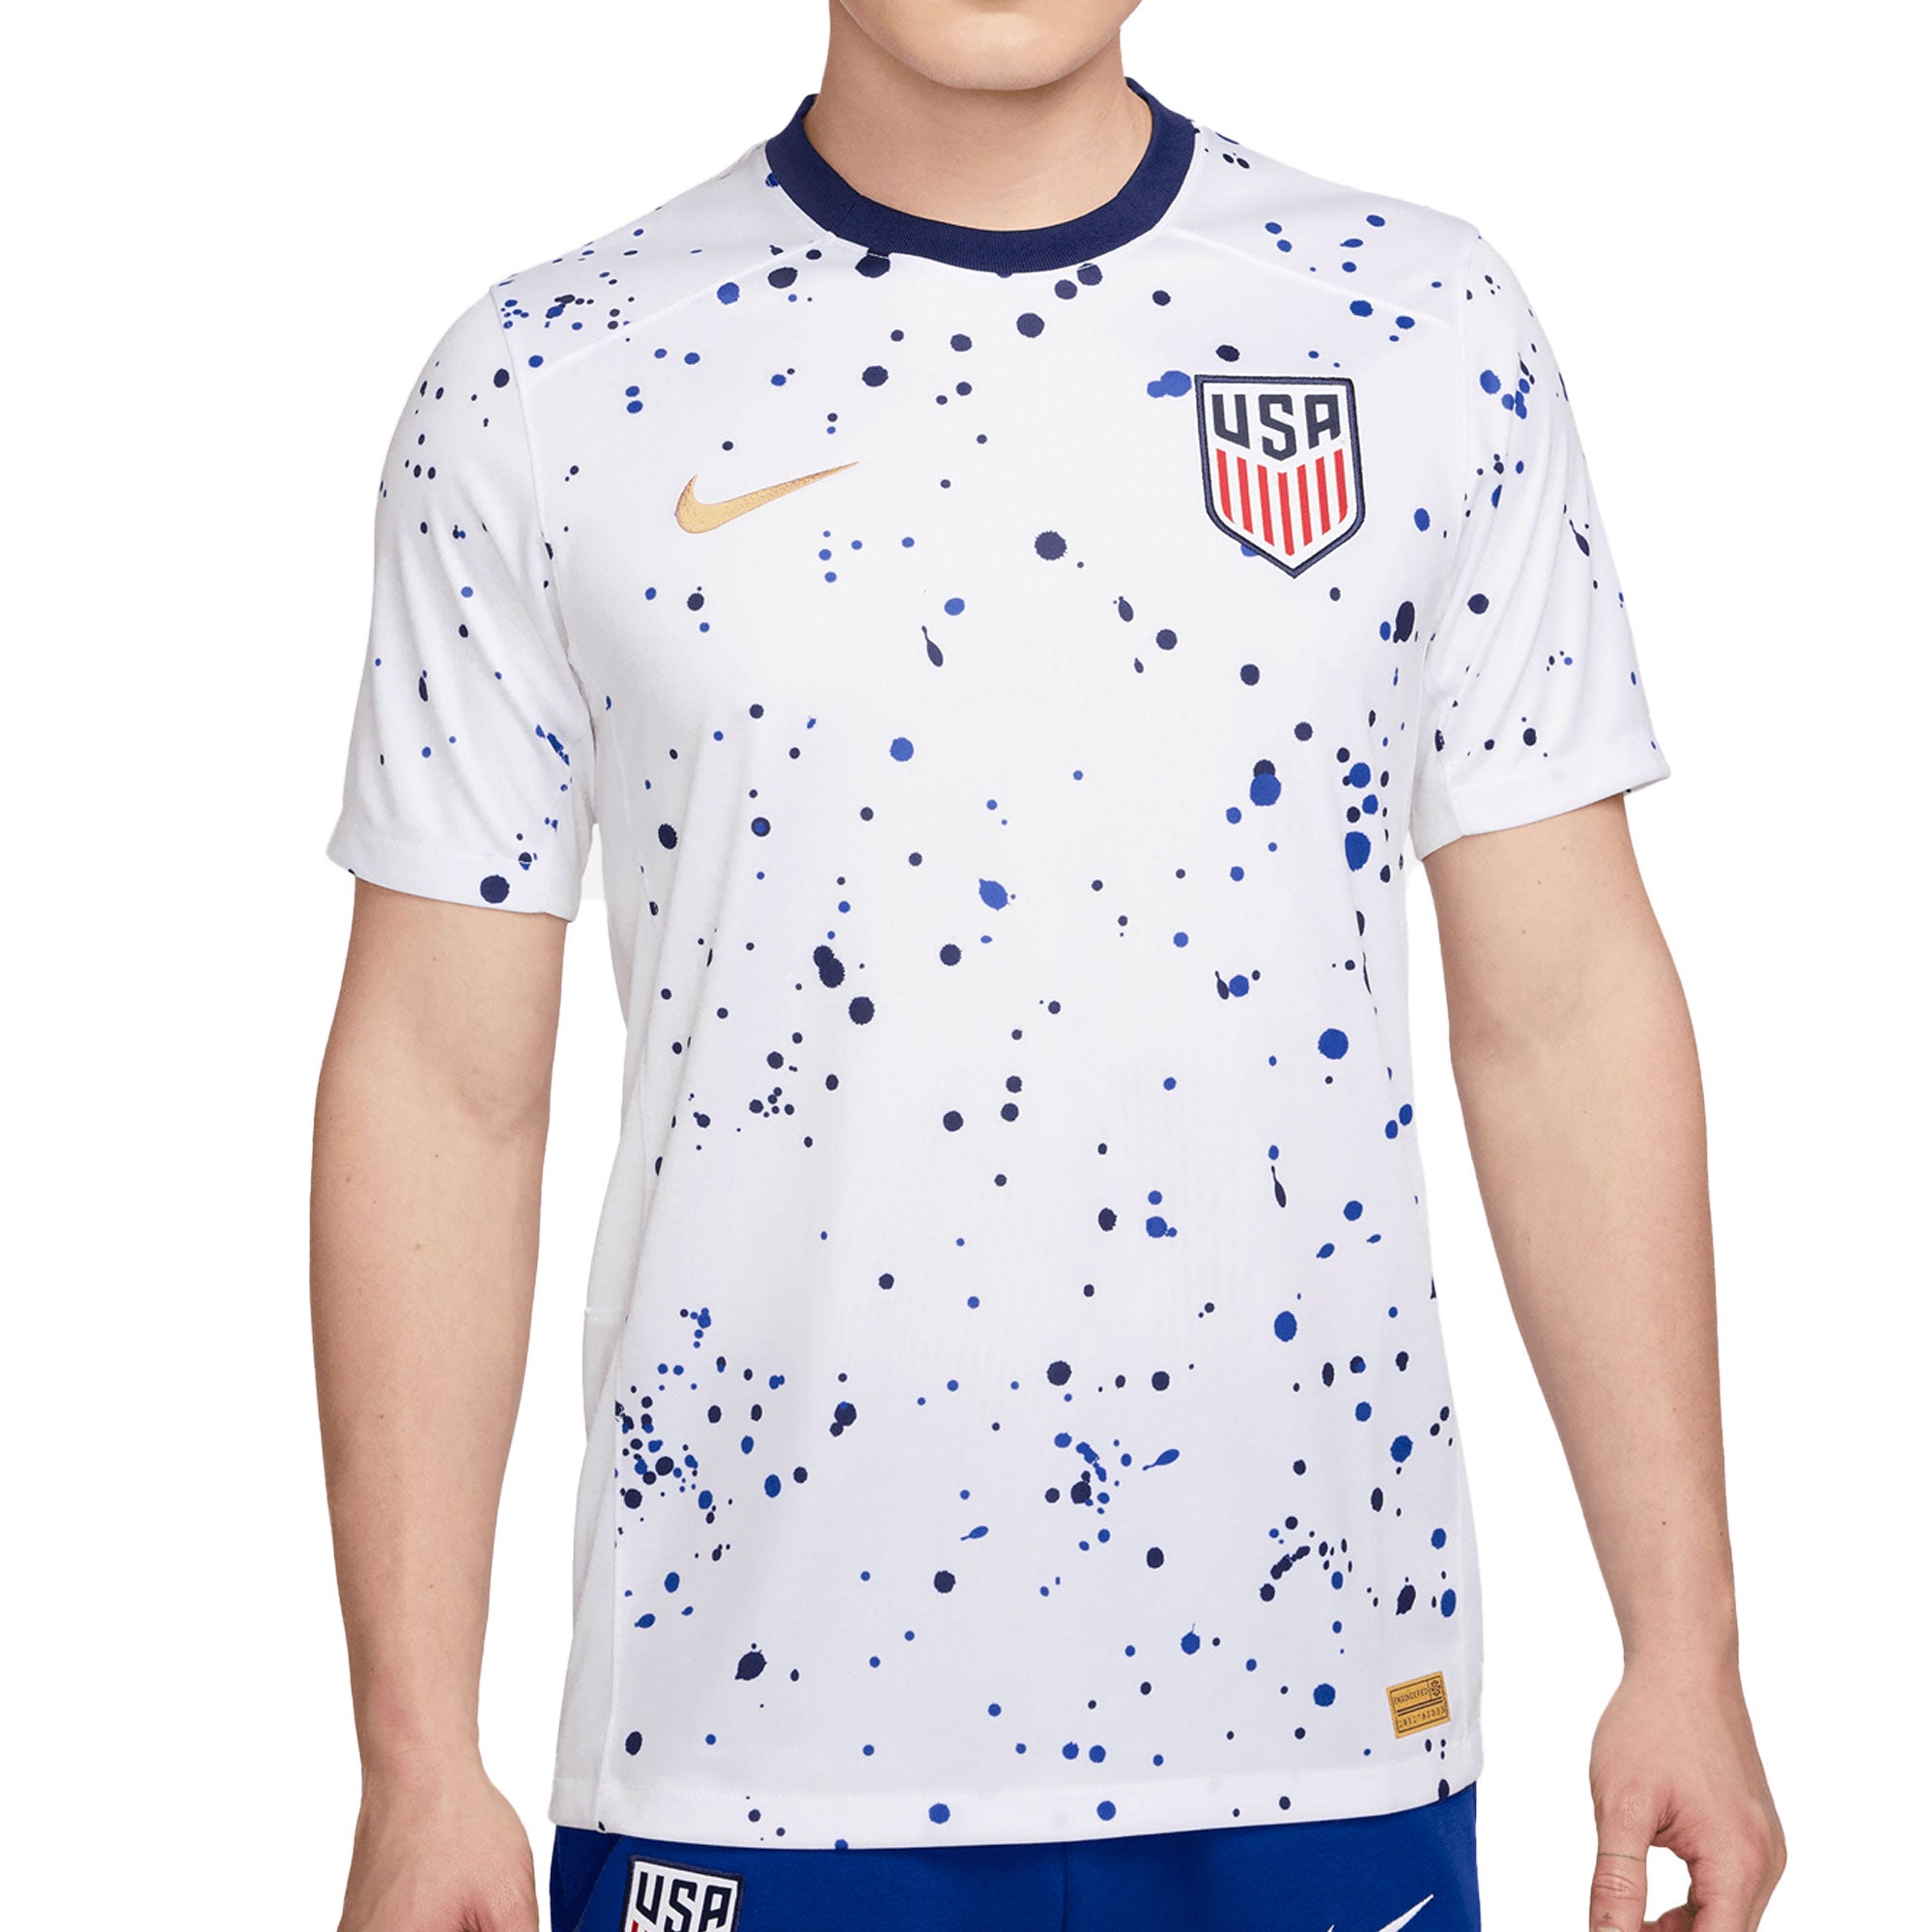 Nike Team USA Soccer Jersey  Usa soccer jersey, Usa soccer team